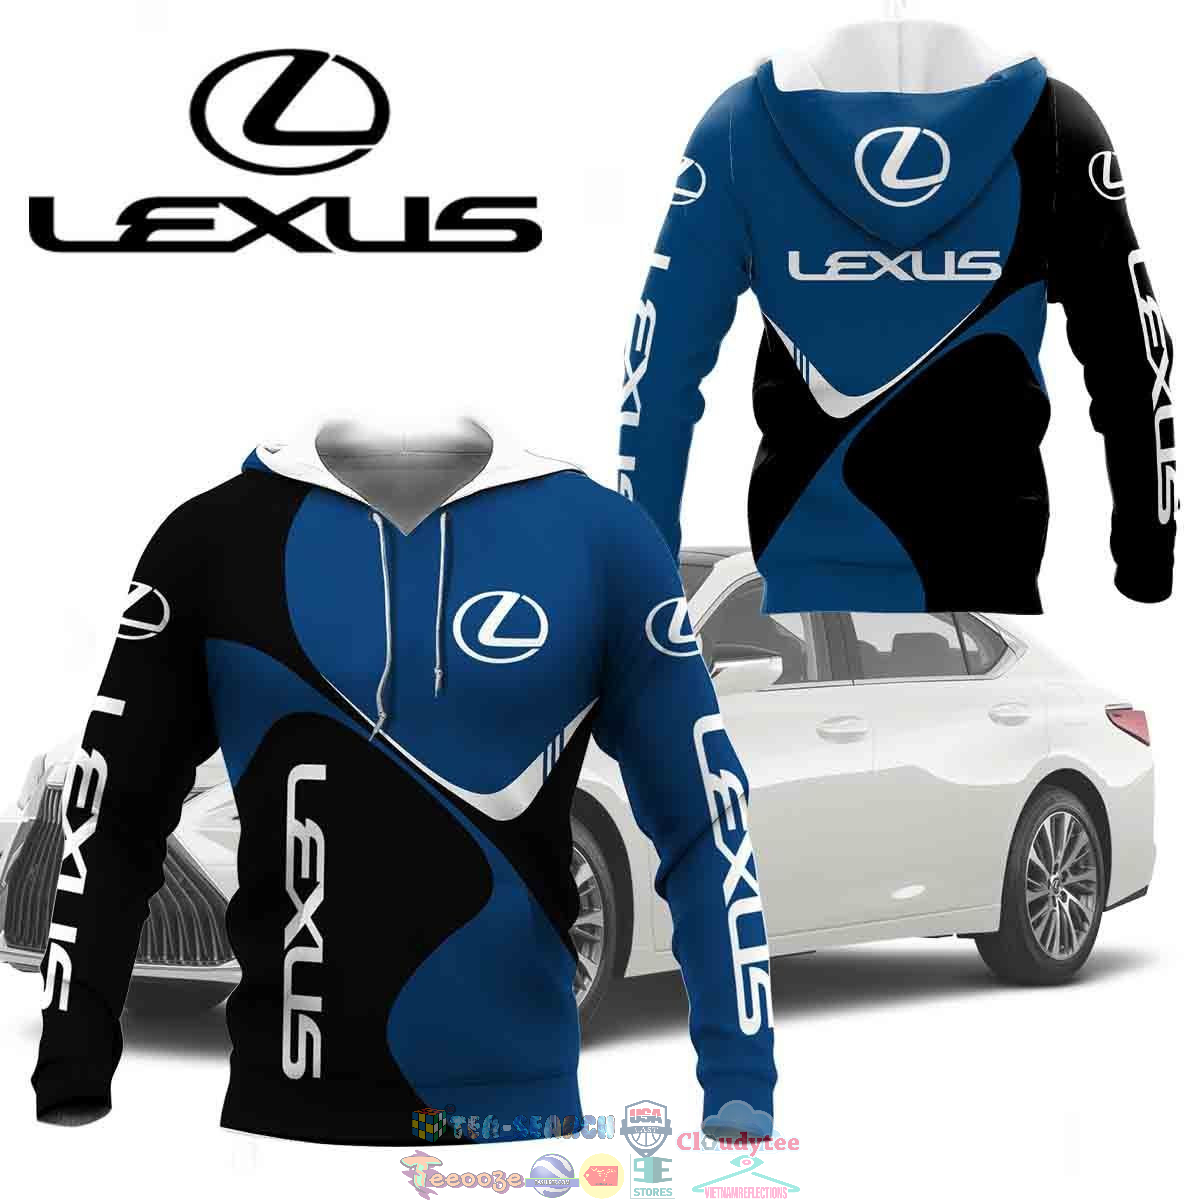 Lexus ver 7 3D hoodie and t-shirt